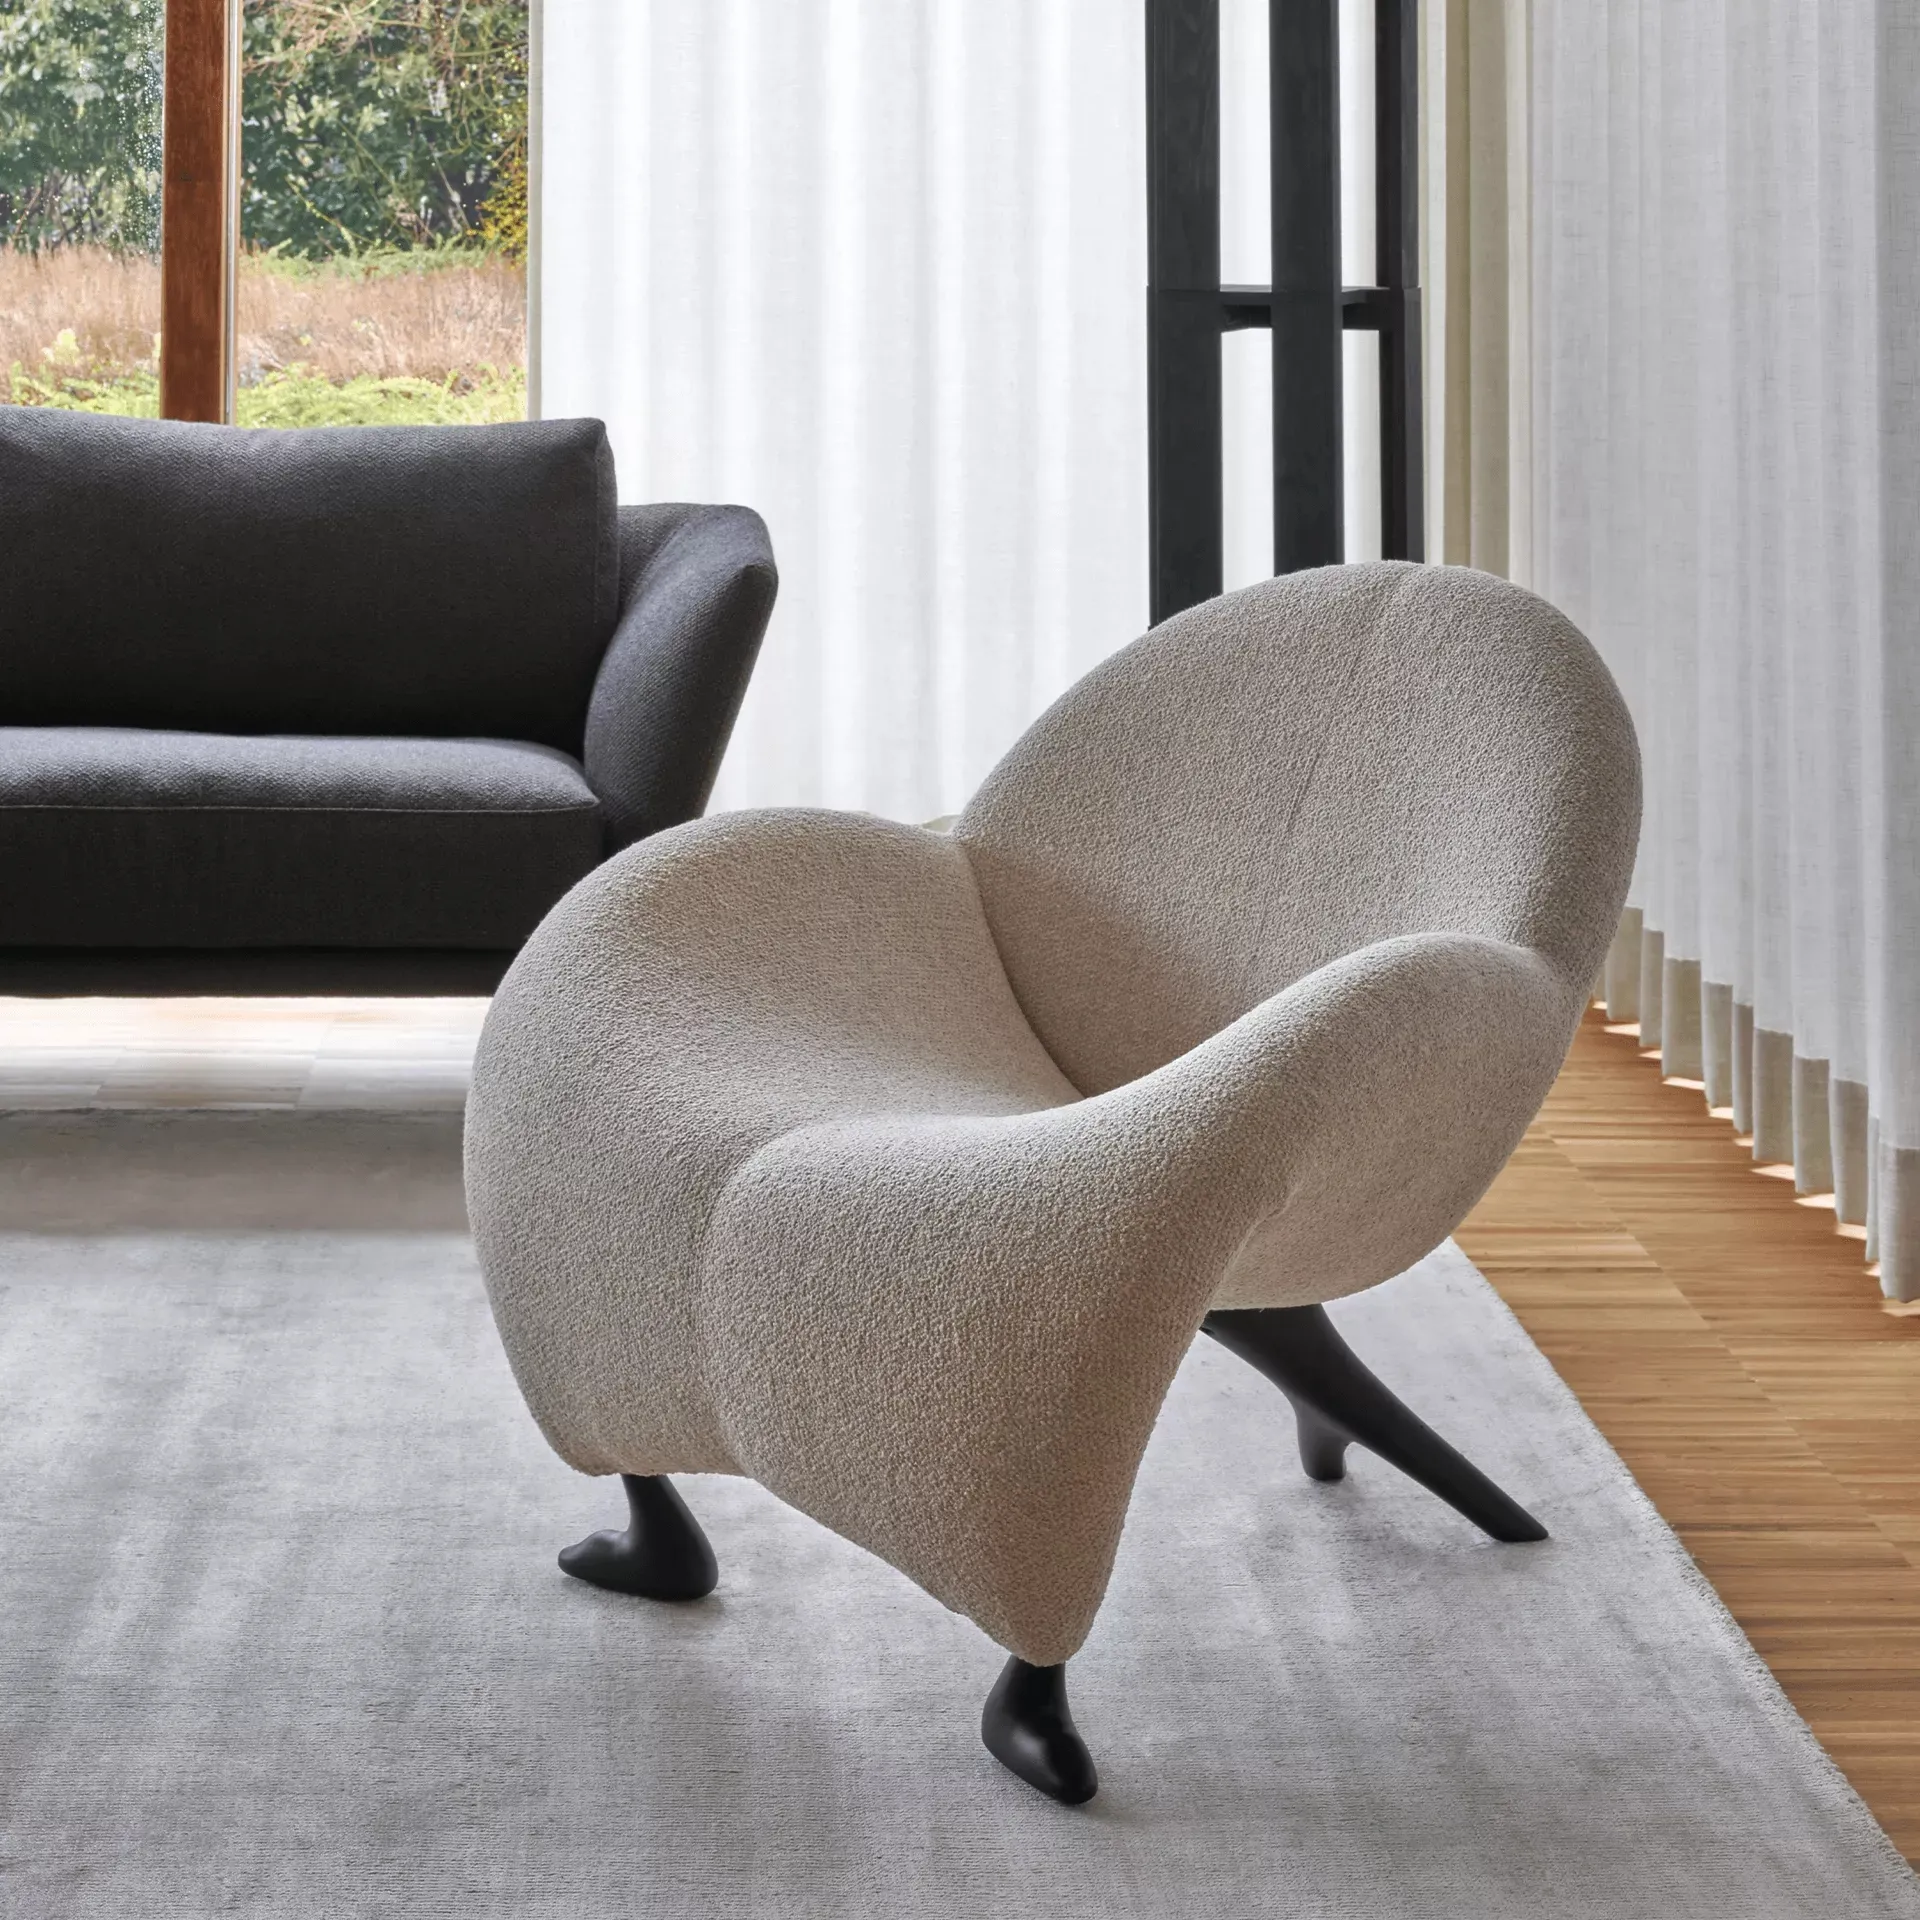 Custom Modern Designer Glass Fiber Reinforced Plastic Leisure Chair Luxury Single Sofa with Horn Shaped Seat for Garden Use